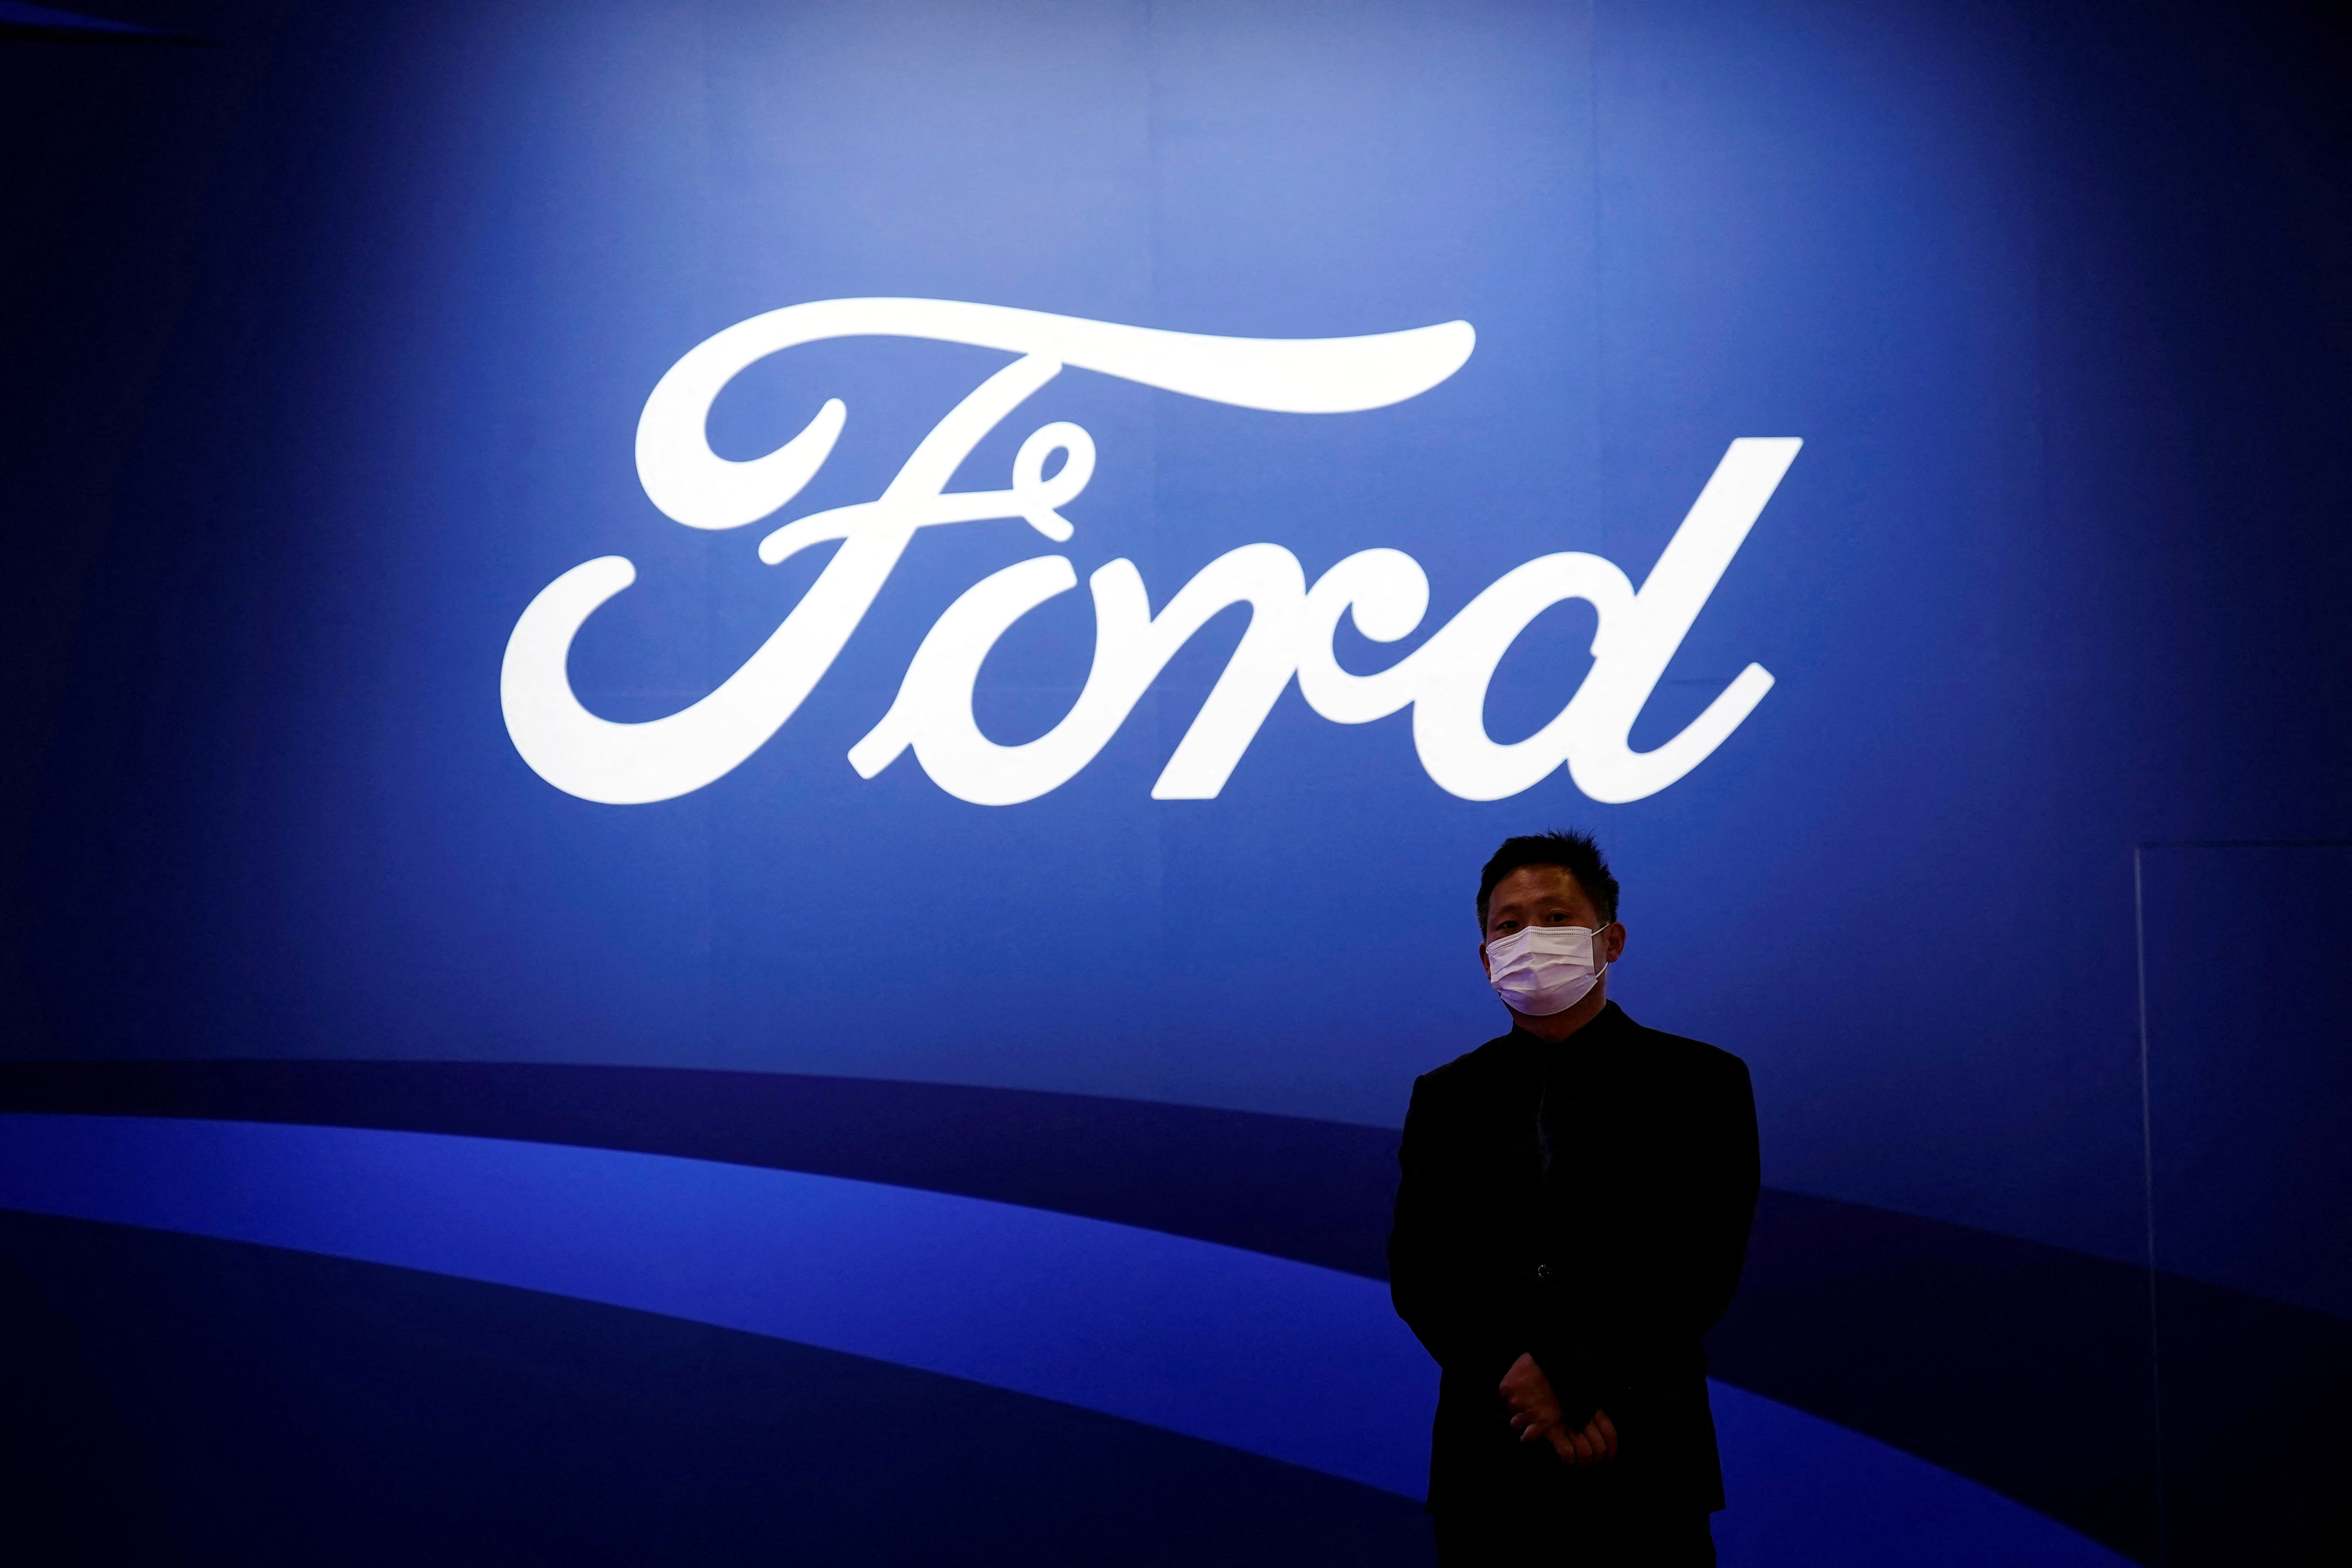 Ford shares skid despite a bullish 2022 outlook